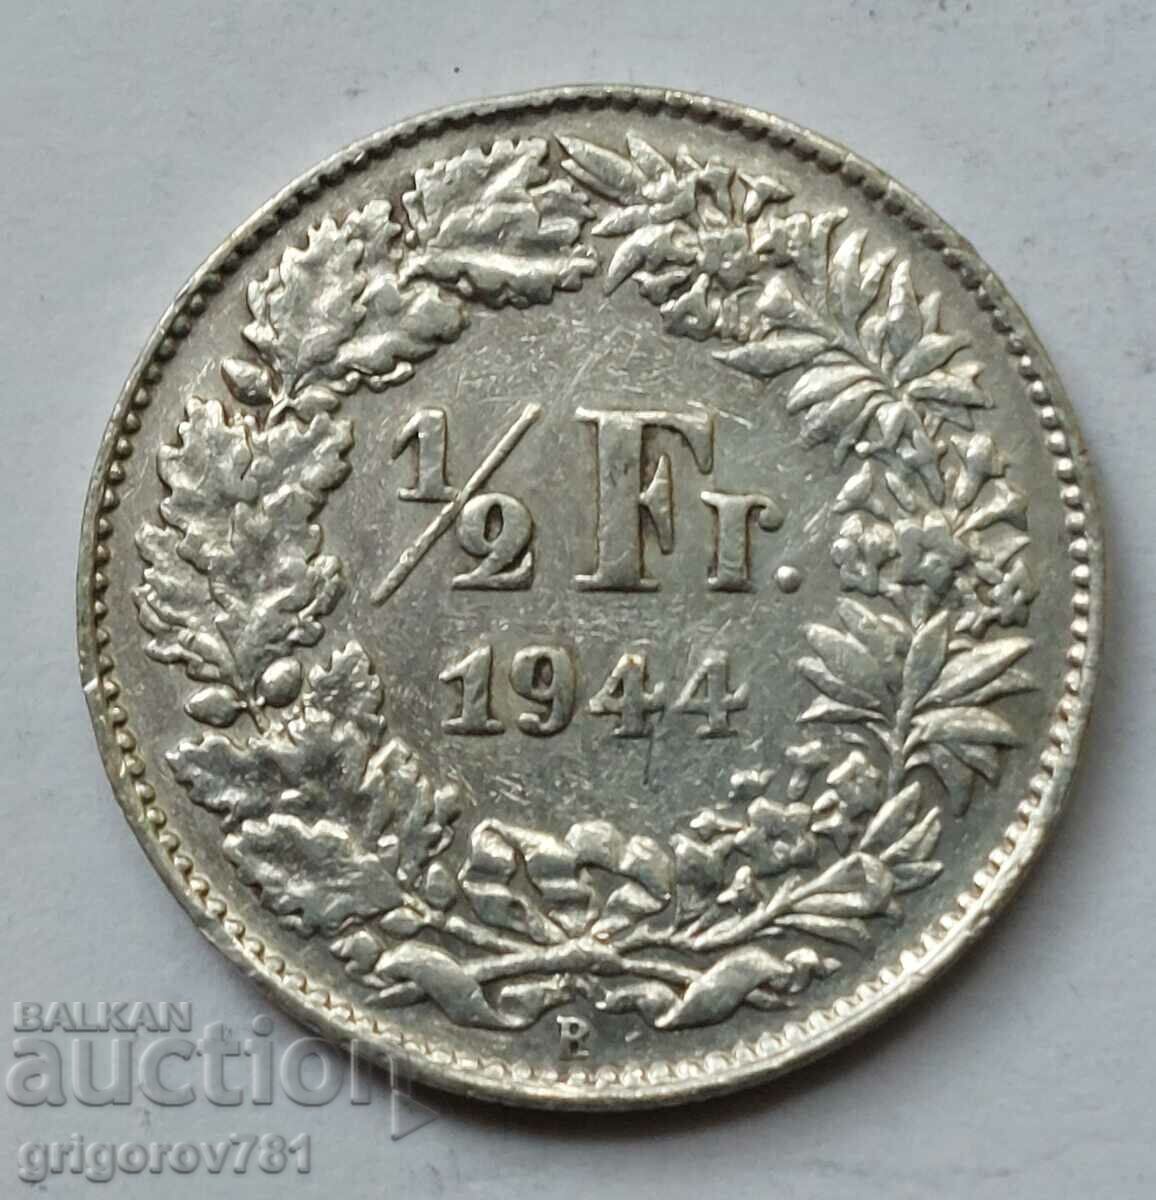 1/2 Franc Silver Switzerland 1944 B - Silver Coin #75